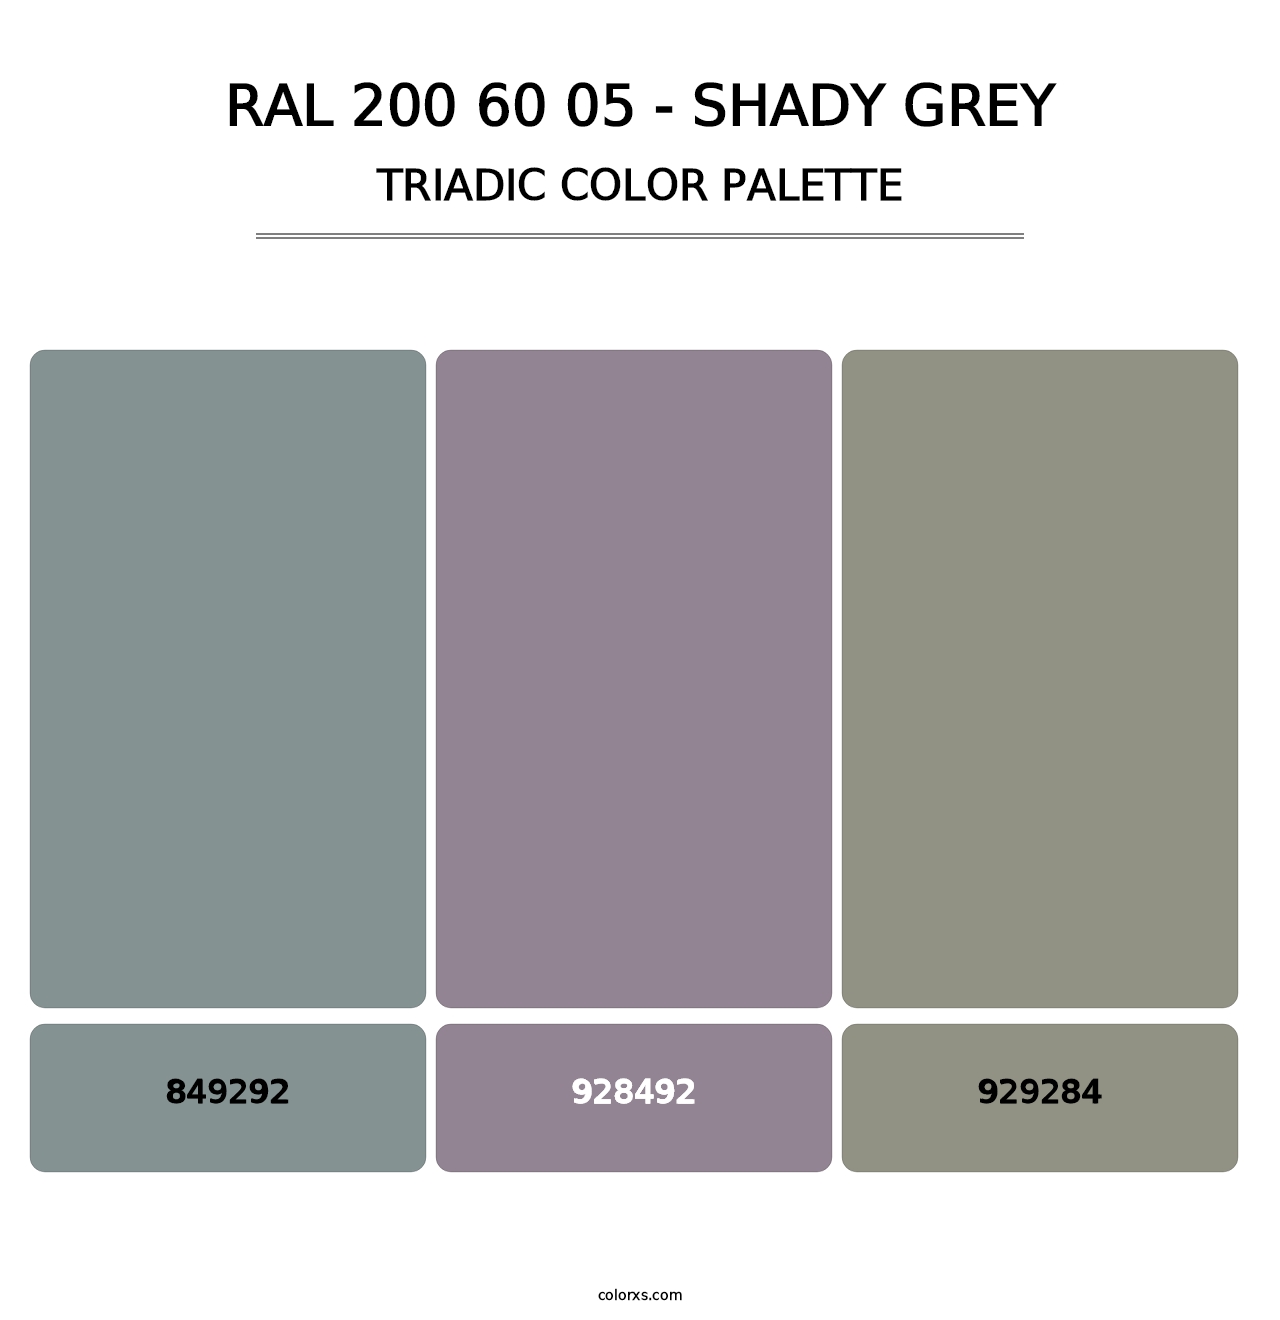 RAL 200 60 05 - Shady Grey - Triadic Color Palette